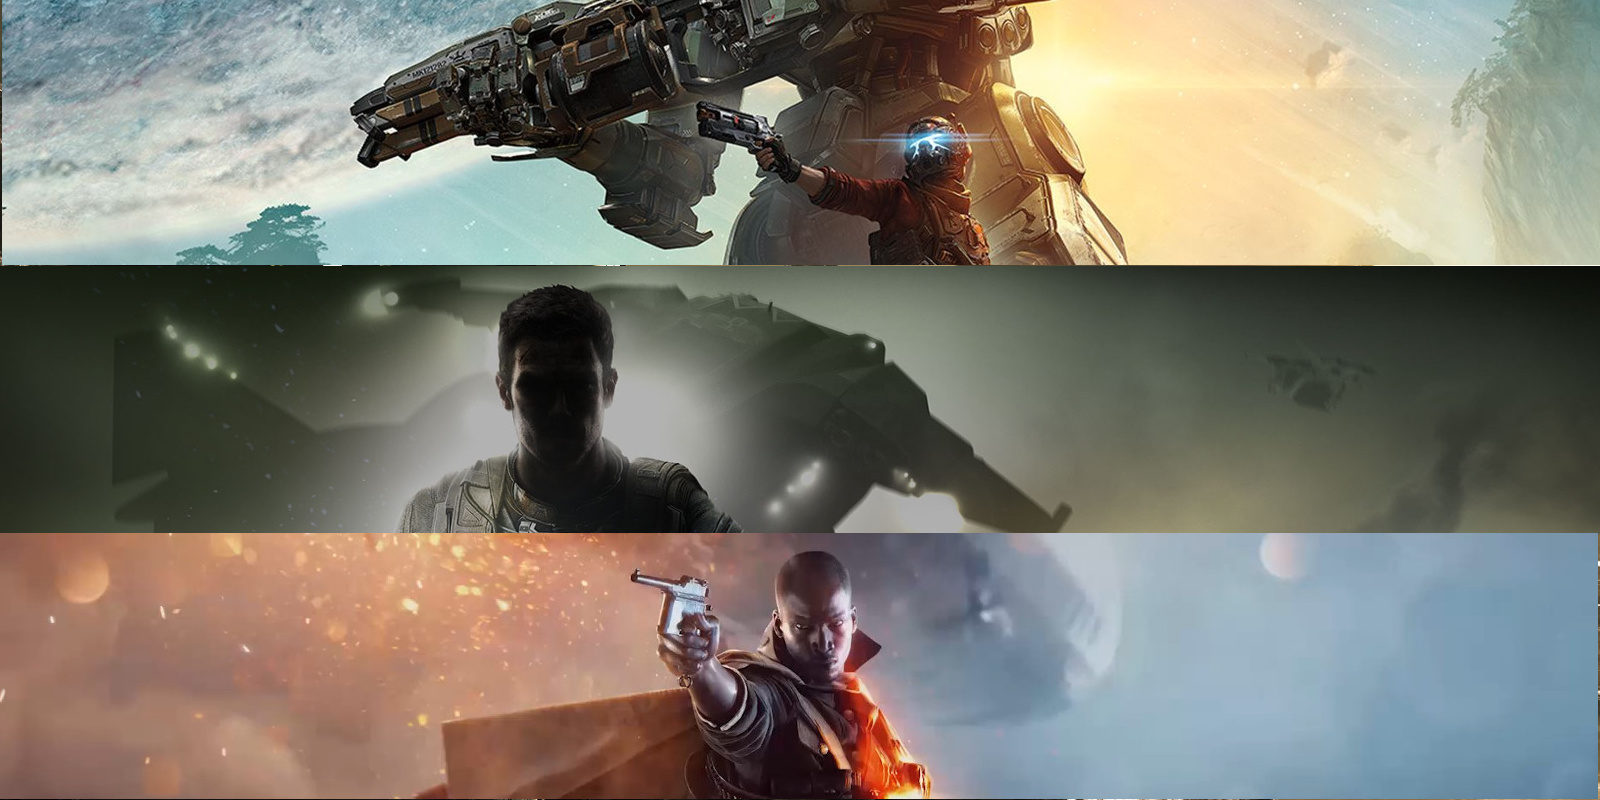 Guerra de shooters - 'Battlefield 1' vs 'Call of Duty: Infinite Warfare' vs 'Titanfall 2'